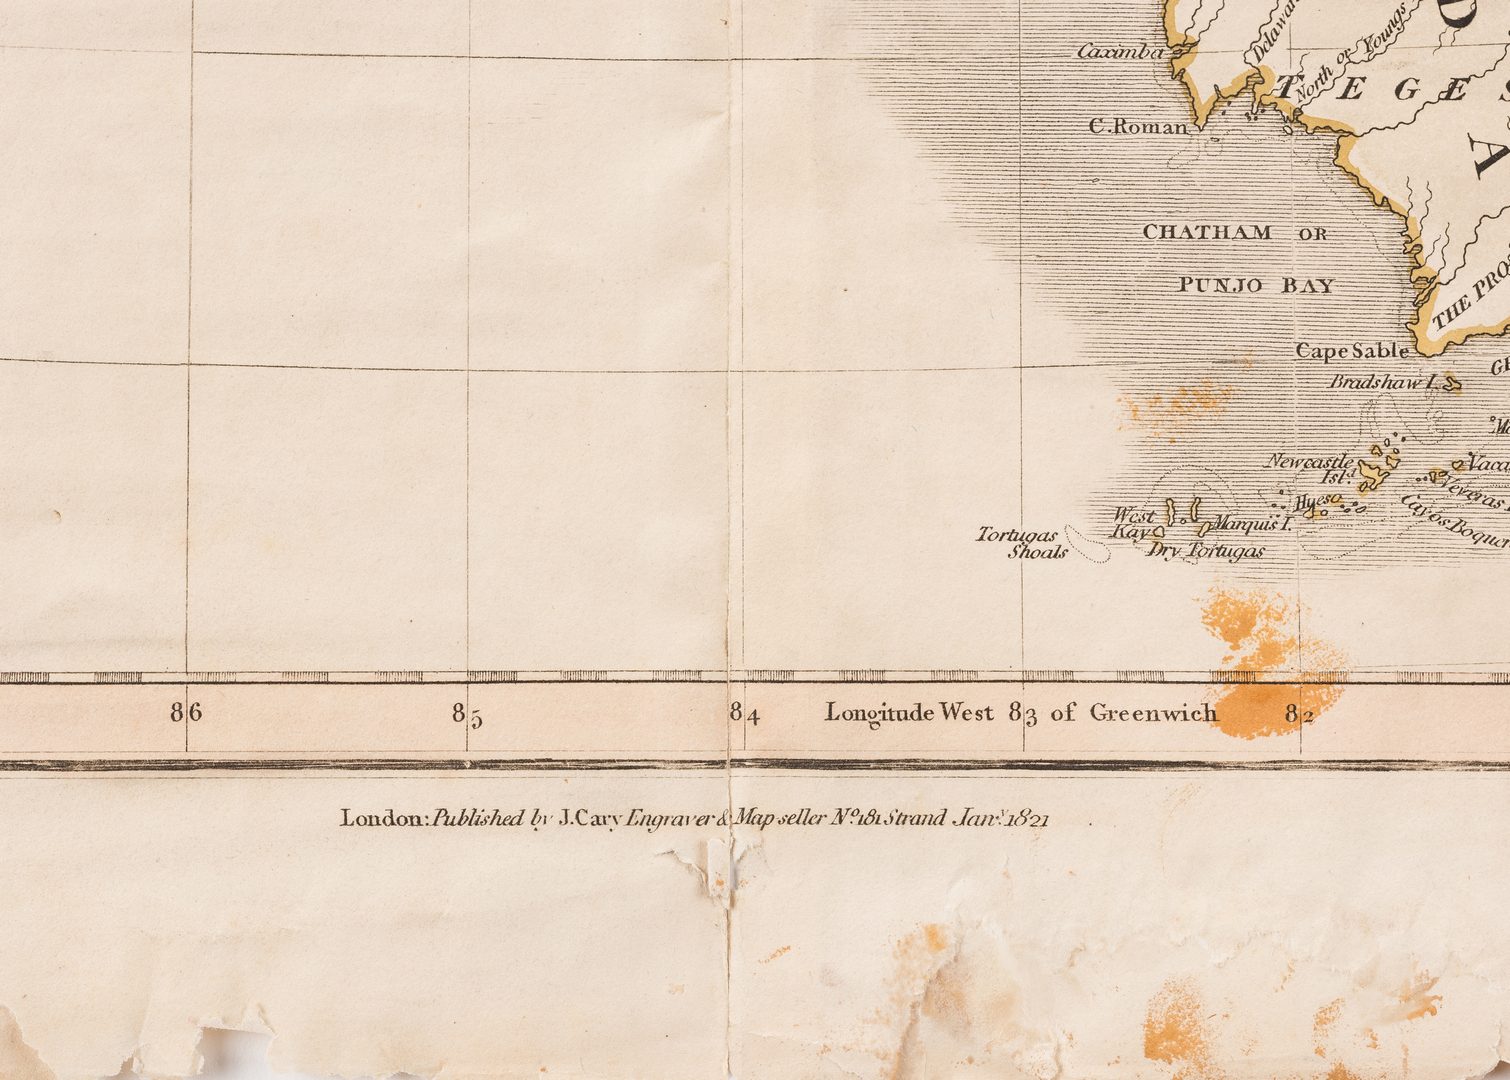 Lot 295: Cary Map of the Southeast, 1821, inc. Alabama